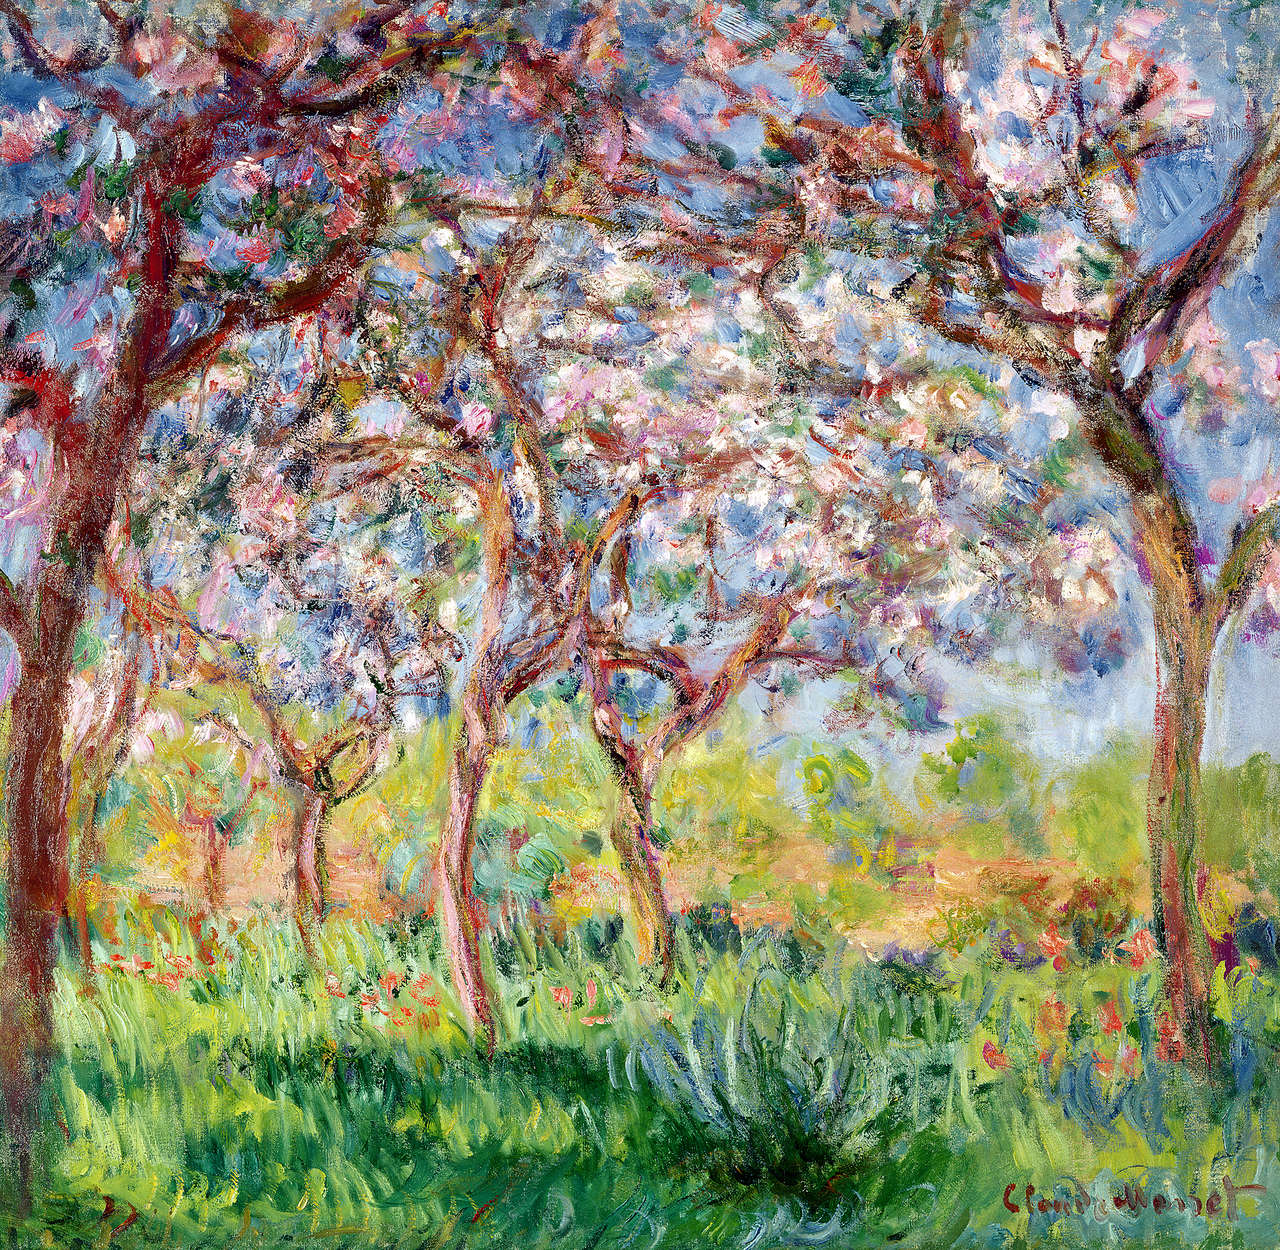             Fototapete "Frühling in Giverny" von Claude Monet
        